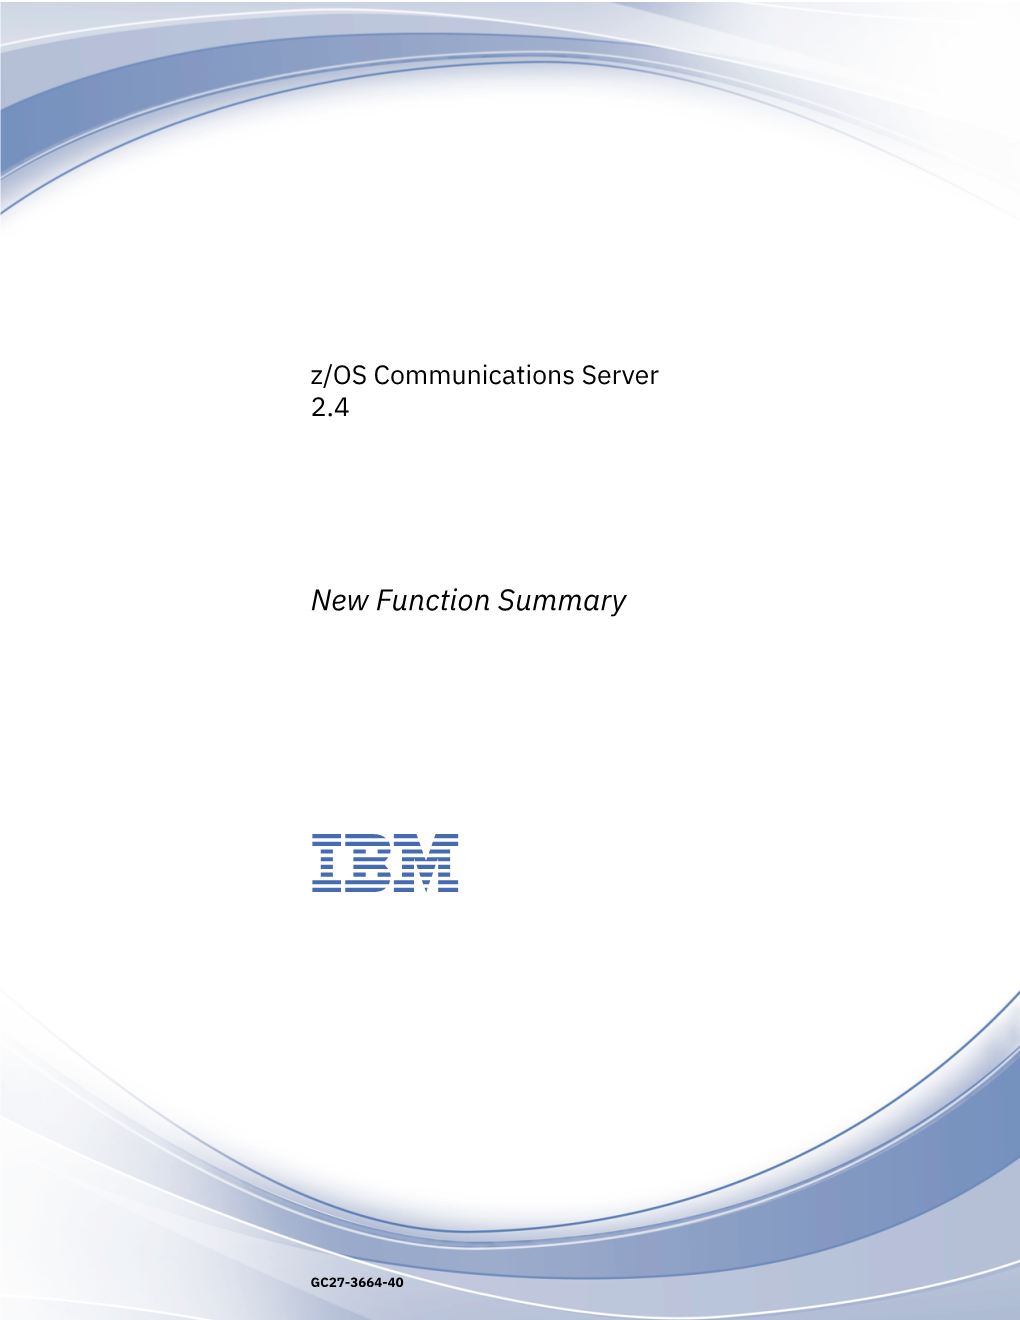 Z/OS V2R4.0 Communications Server: New Function Summary Summary of Changes for New Function Summary